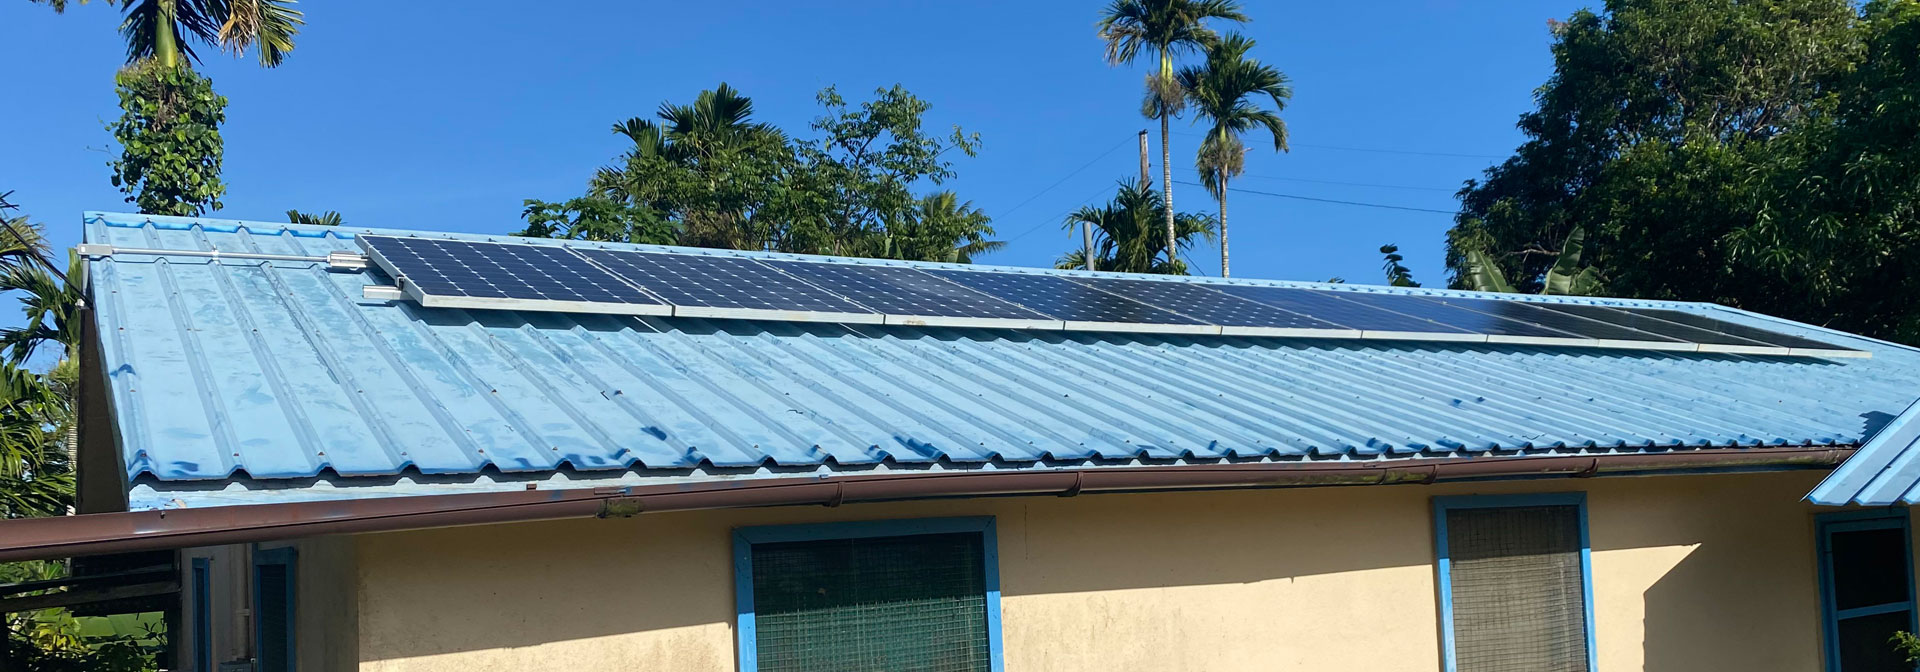 Solar Panel On Residential Home